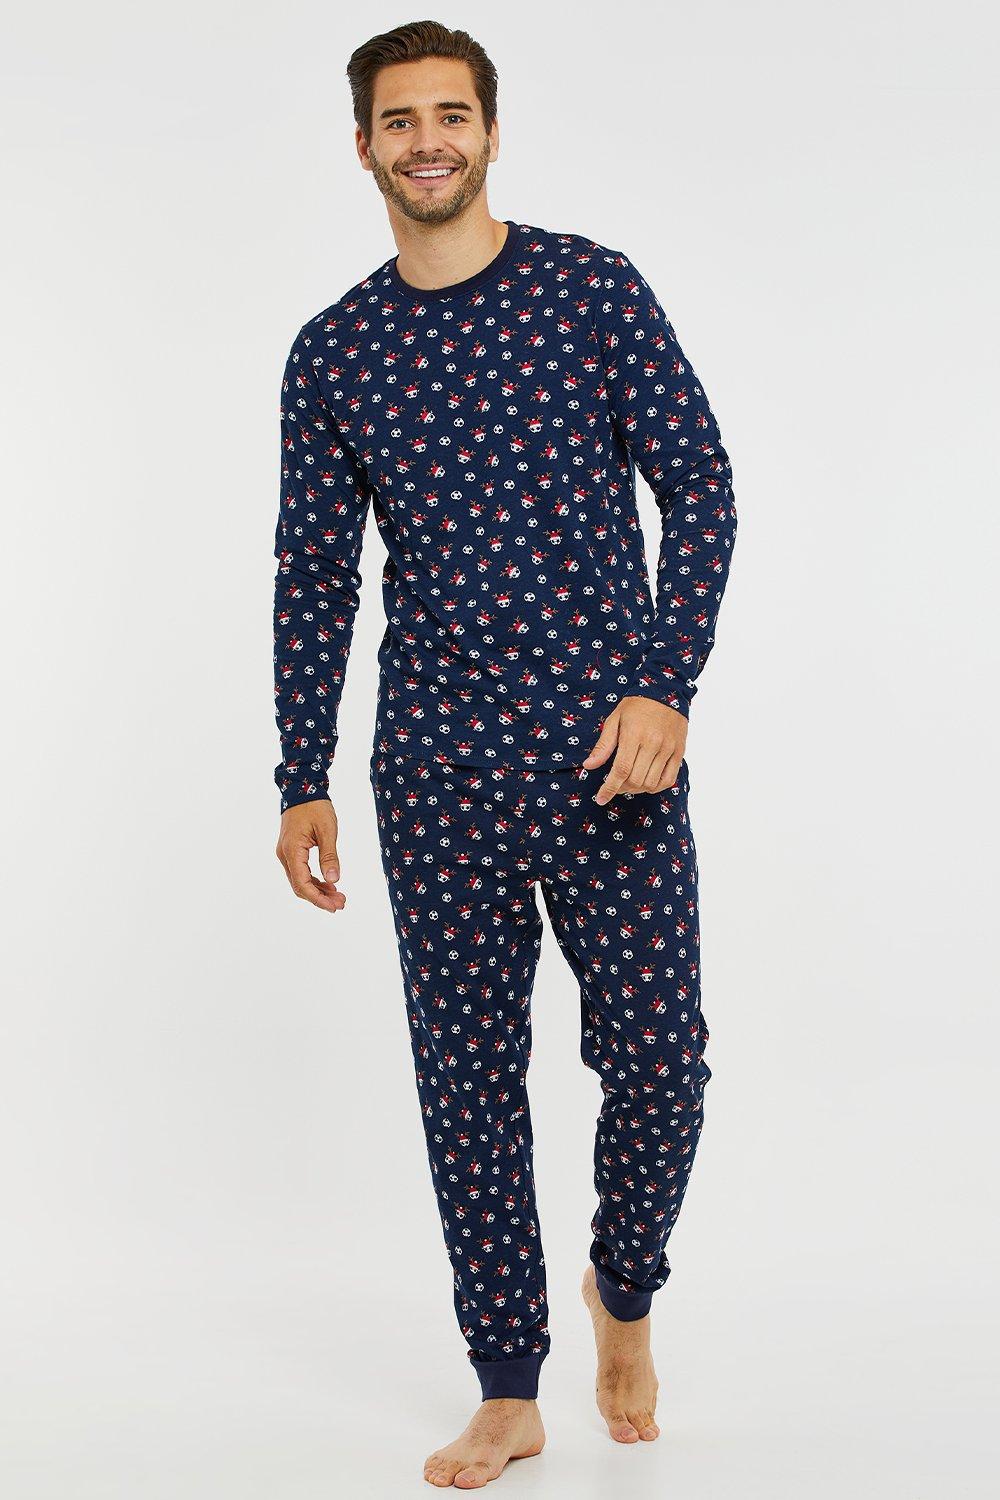 'Footie' Festive Pyjama Set